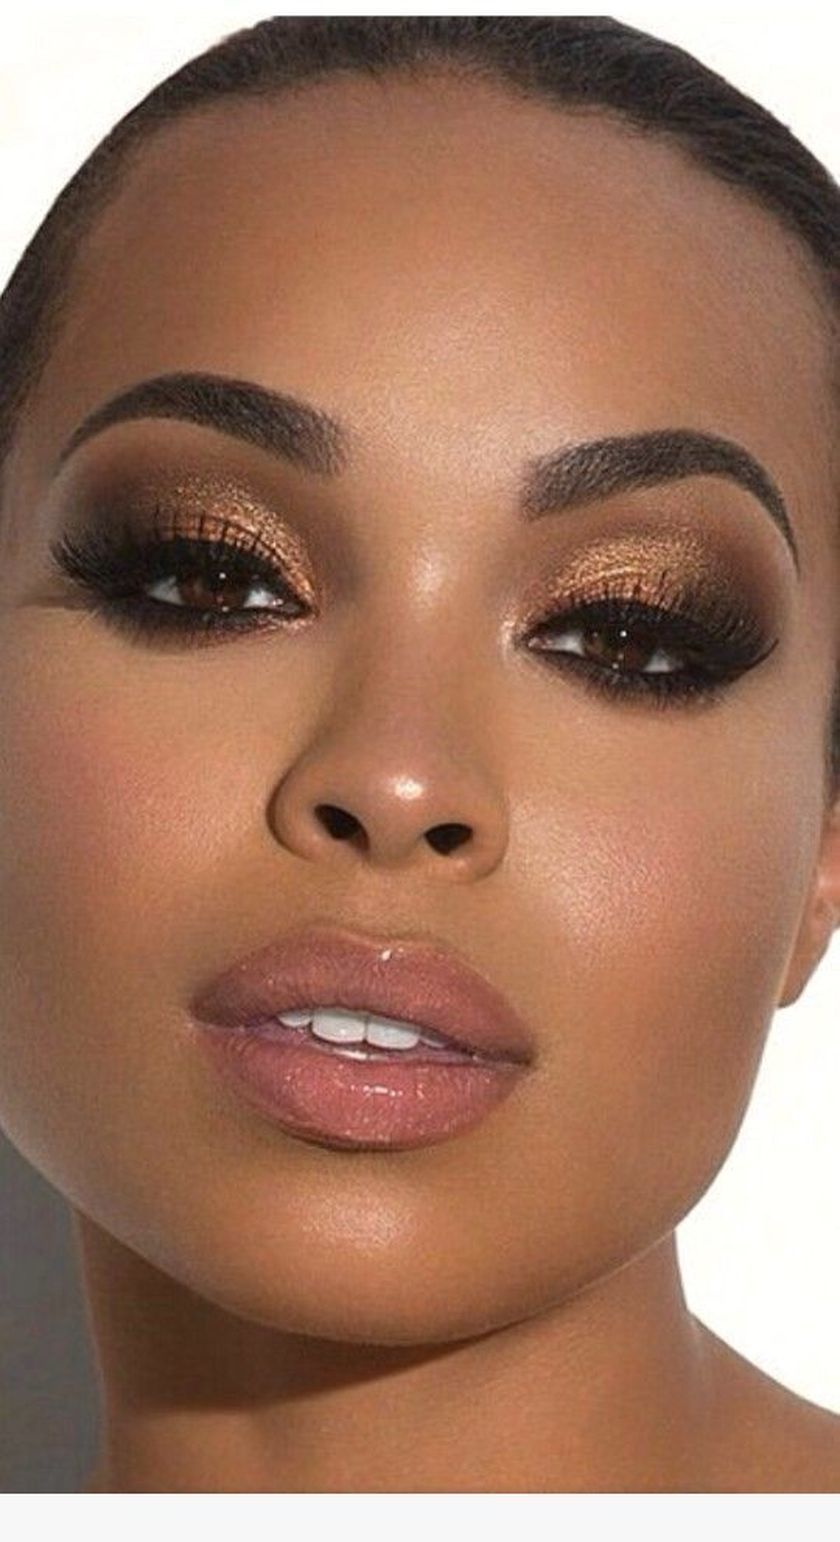 41 Extraordinary Makeup Ideas for Black Skin That Very Inspiring -   15 wedding Makeup for black women ideas